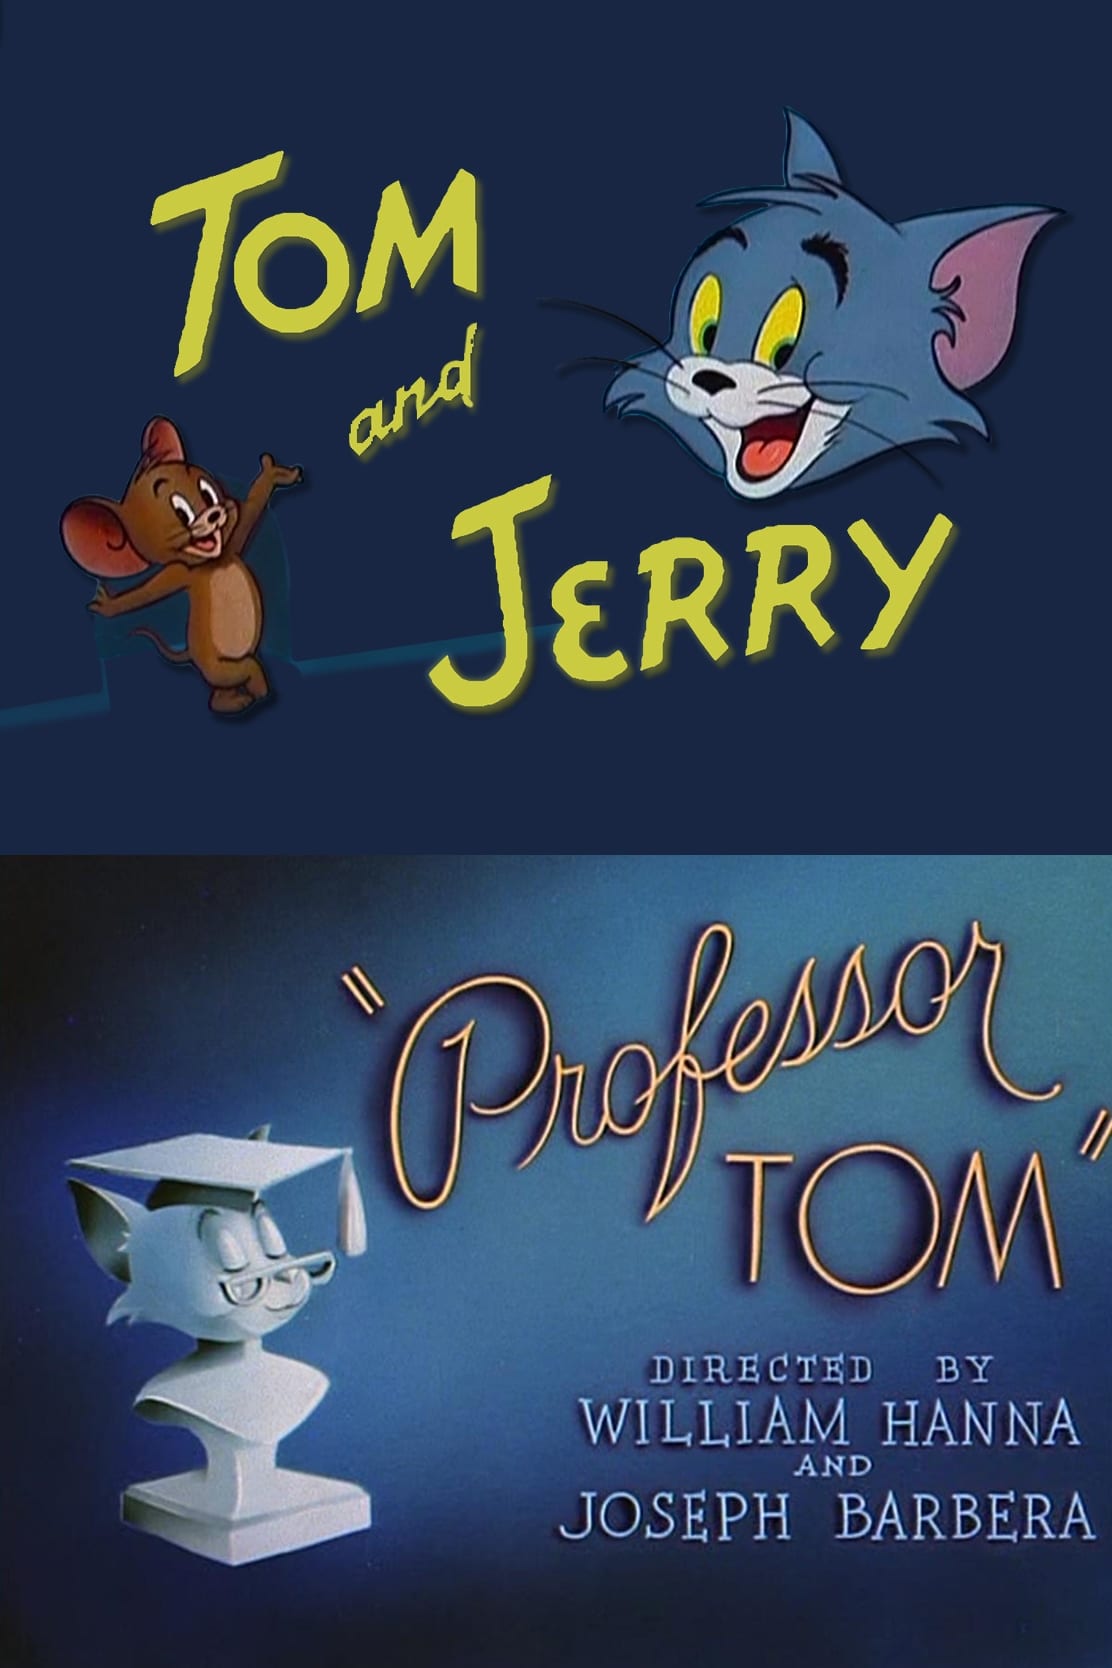 Professor Tom (1948)